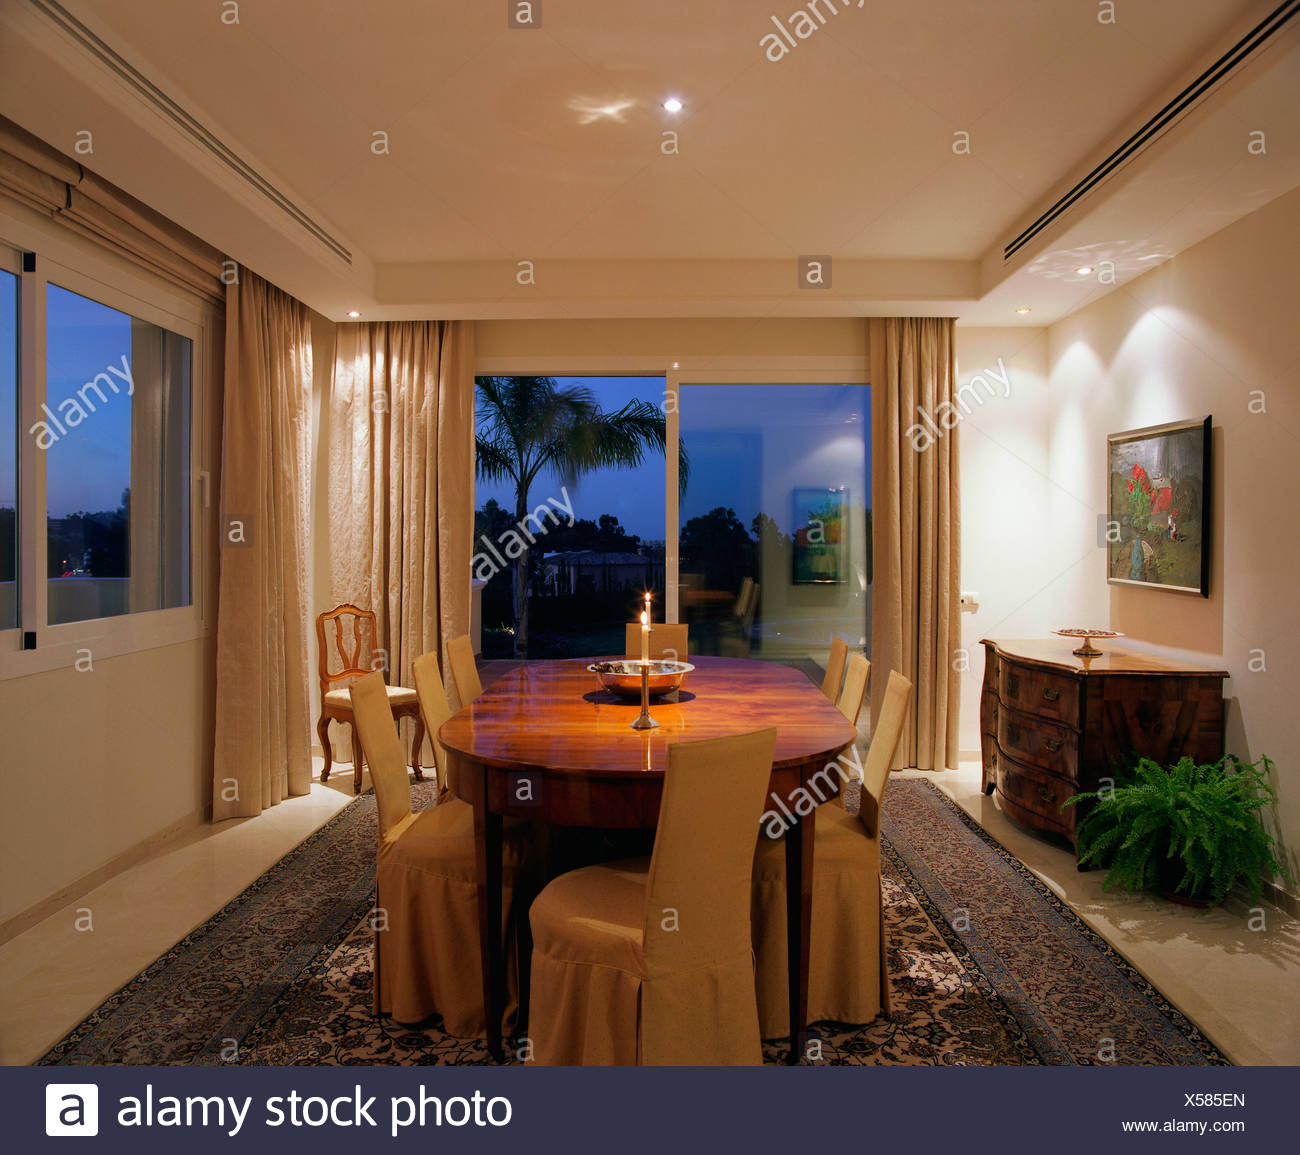 dining room down lighting